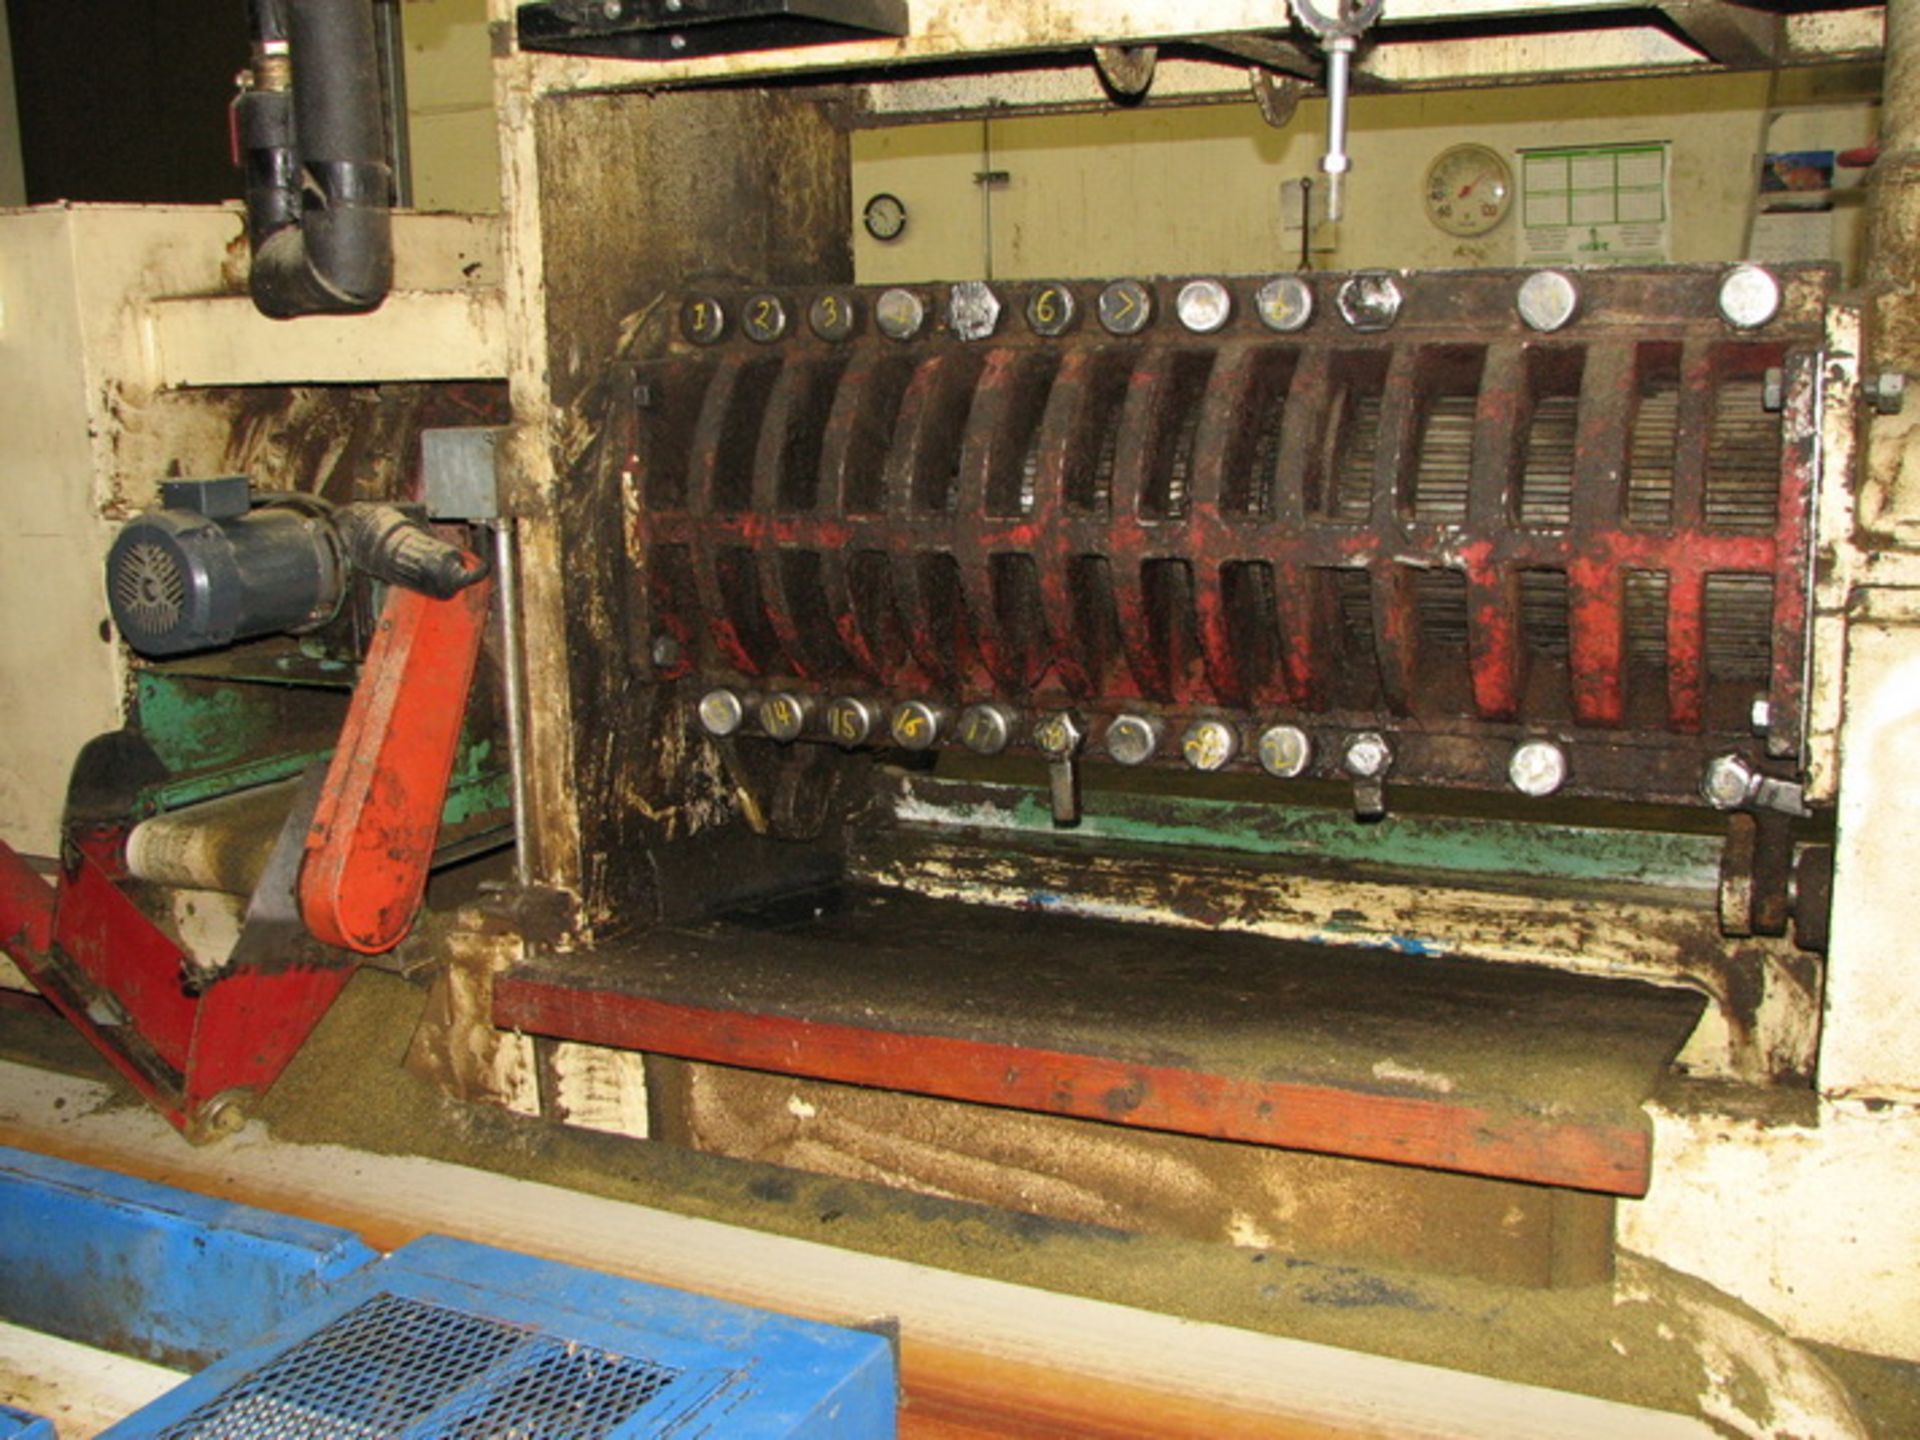 Hubei Anlu screw type press, model ZX28, s/n 0216, with Hubei Anlu Tianxing 3 layer cooker with - Image 3 of 5